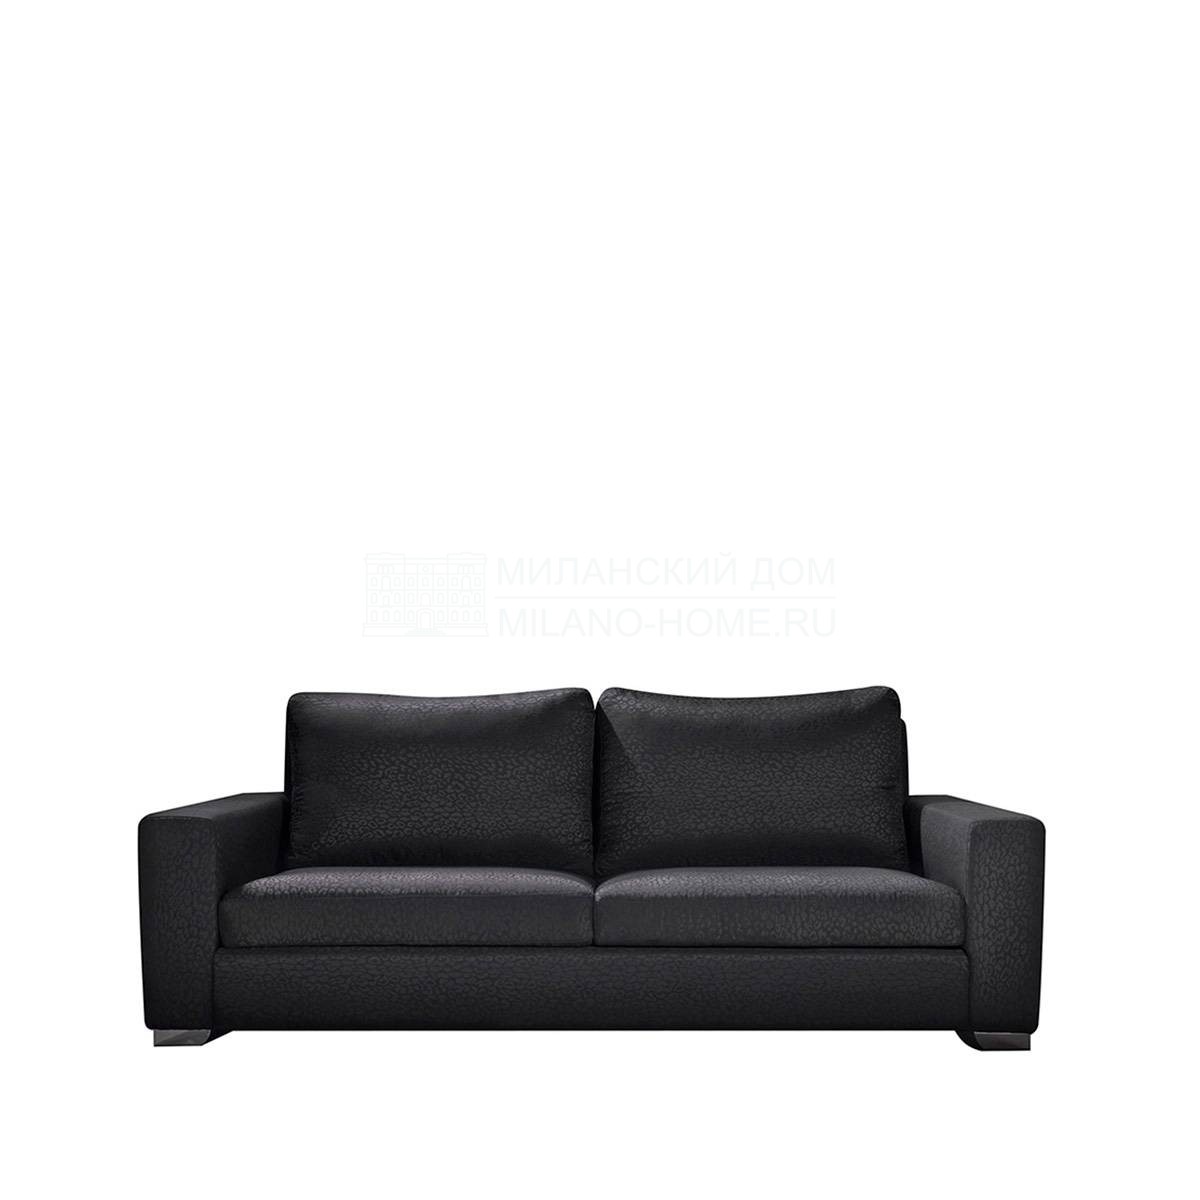 Прямой диван Orson sofa / art.S1665-S1675 из Испании фабрики COLECCION ALEXANDRA